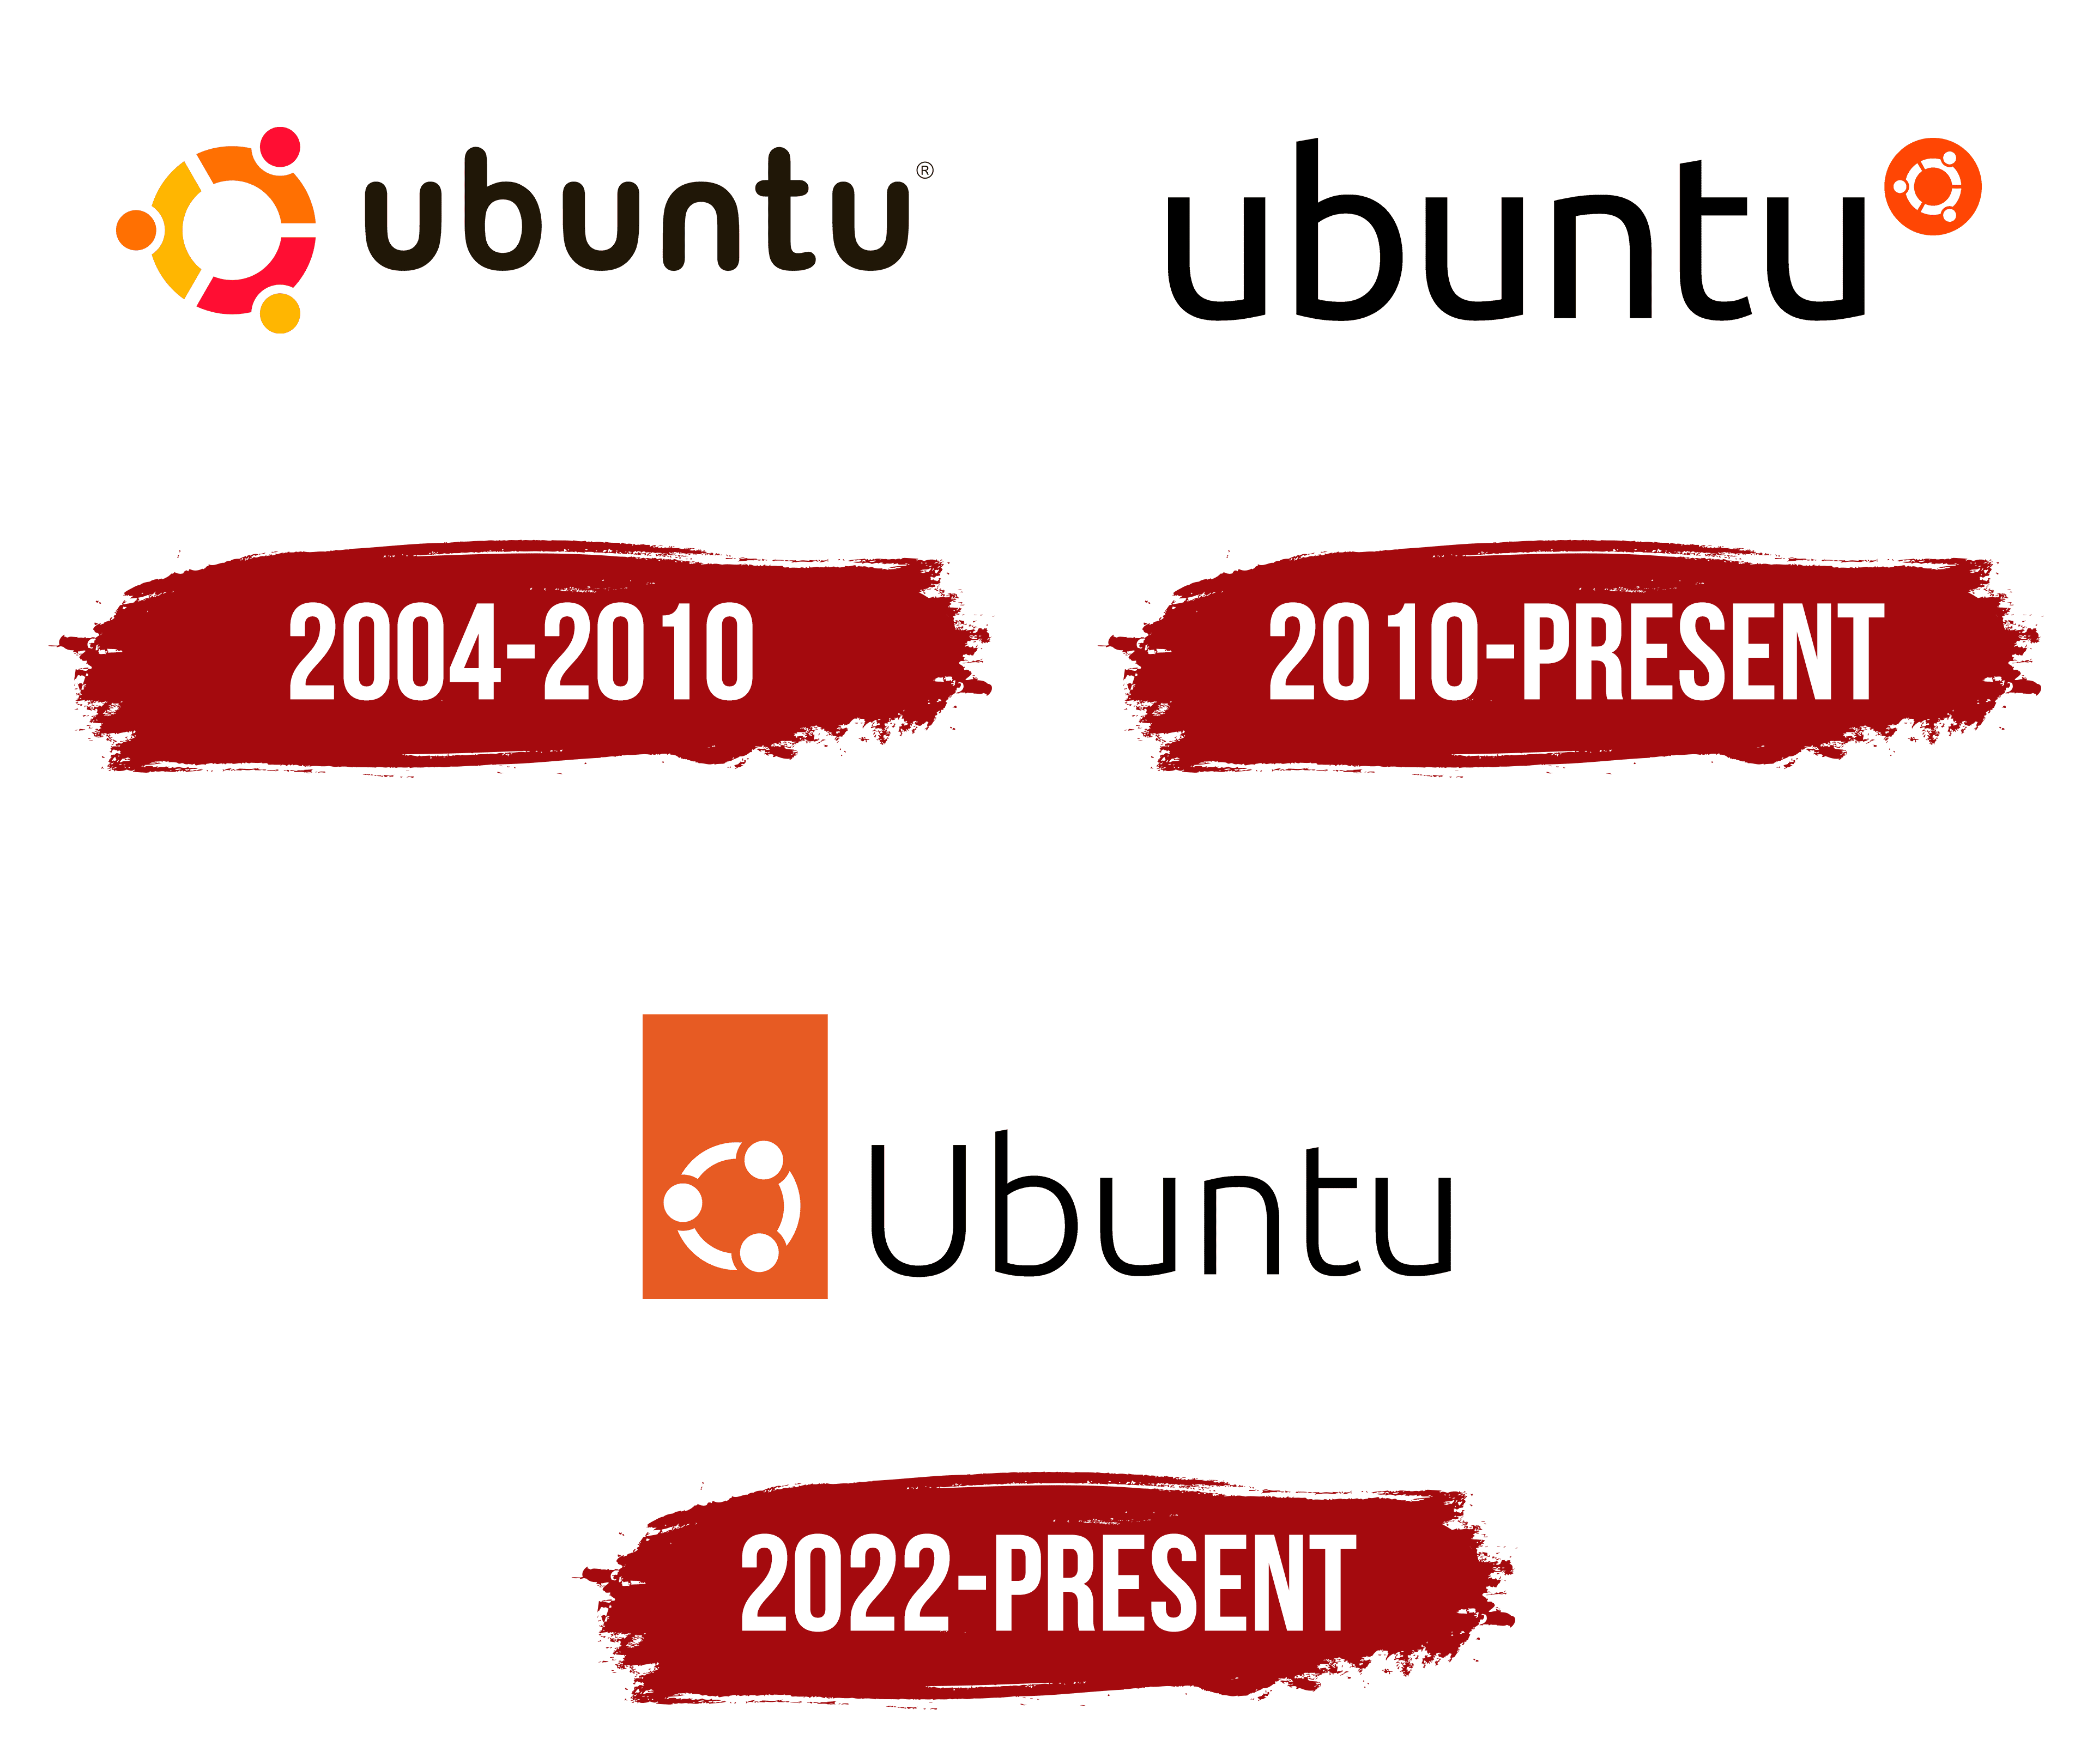 Ubuntu Logo, symbol, meaning, history, PNG, brand